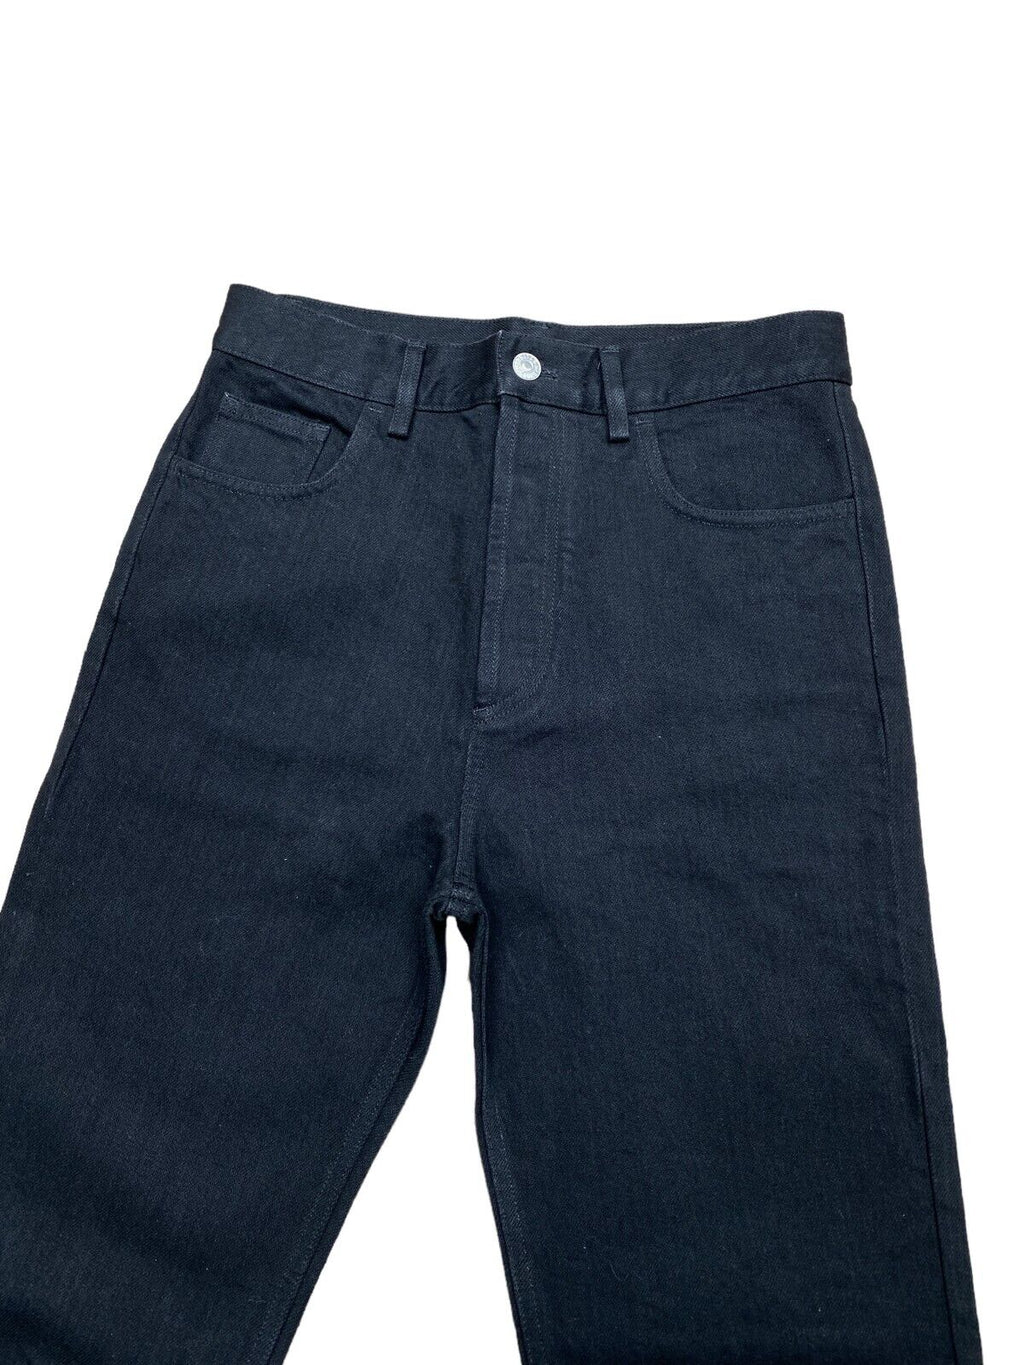 High Waist Heavy Black Denim Jeans  Size 34 US 26